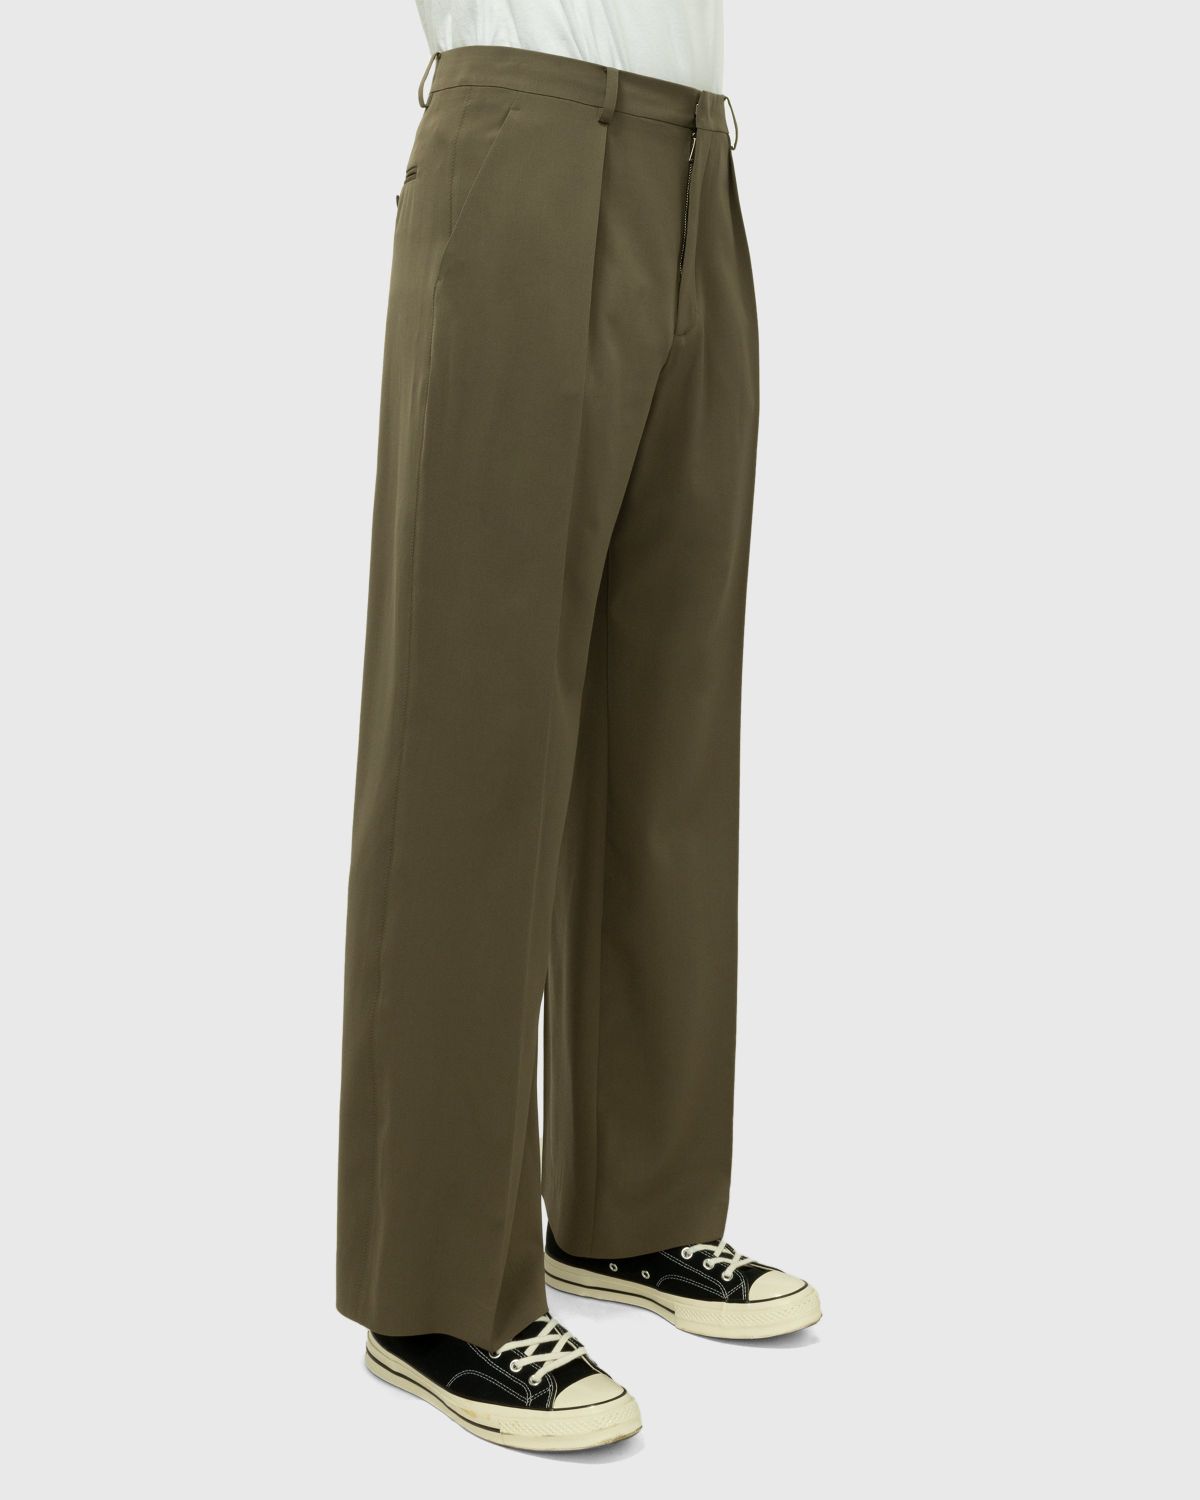 Jean Paul Gaultier – Classic Woven Trouser Khaki - Pants - Brown - Image 4